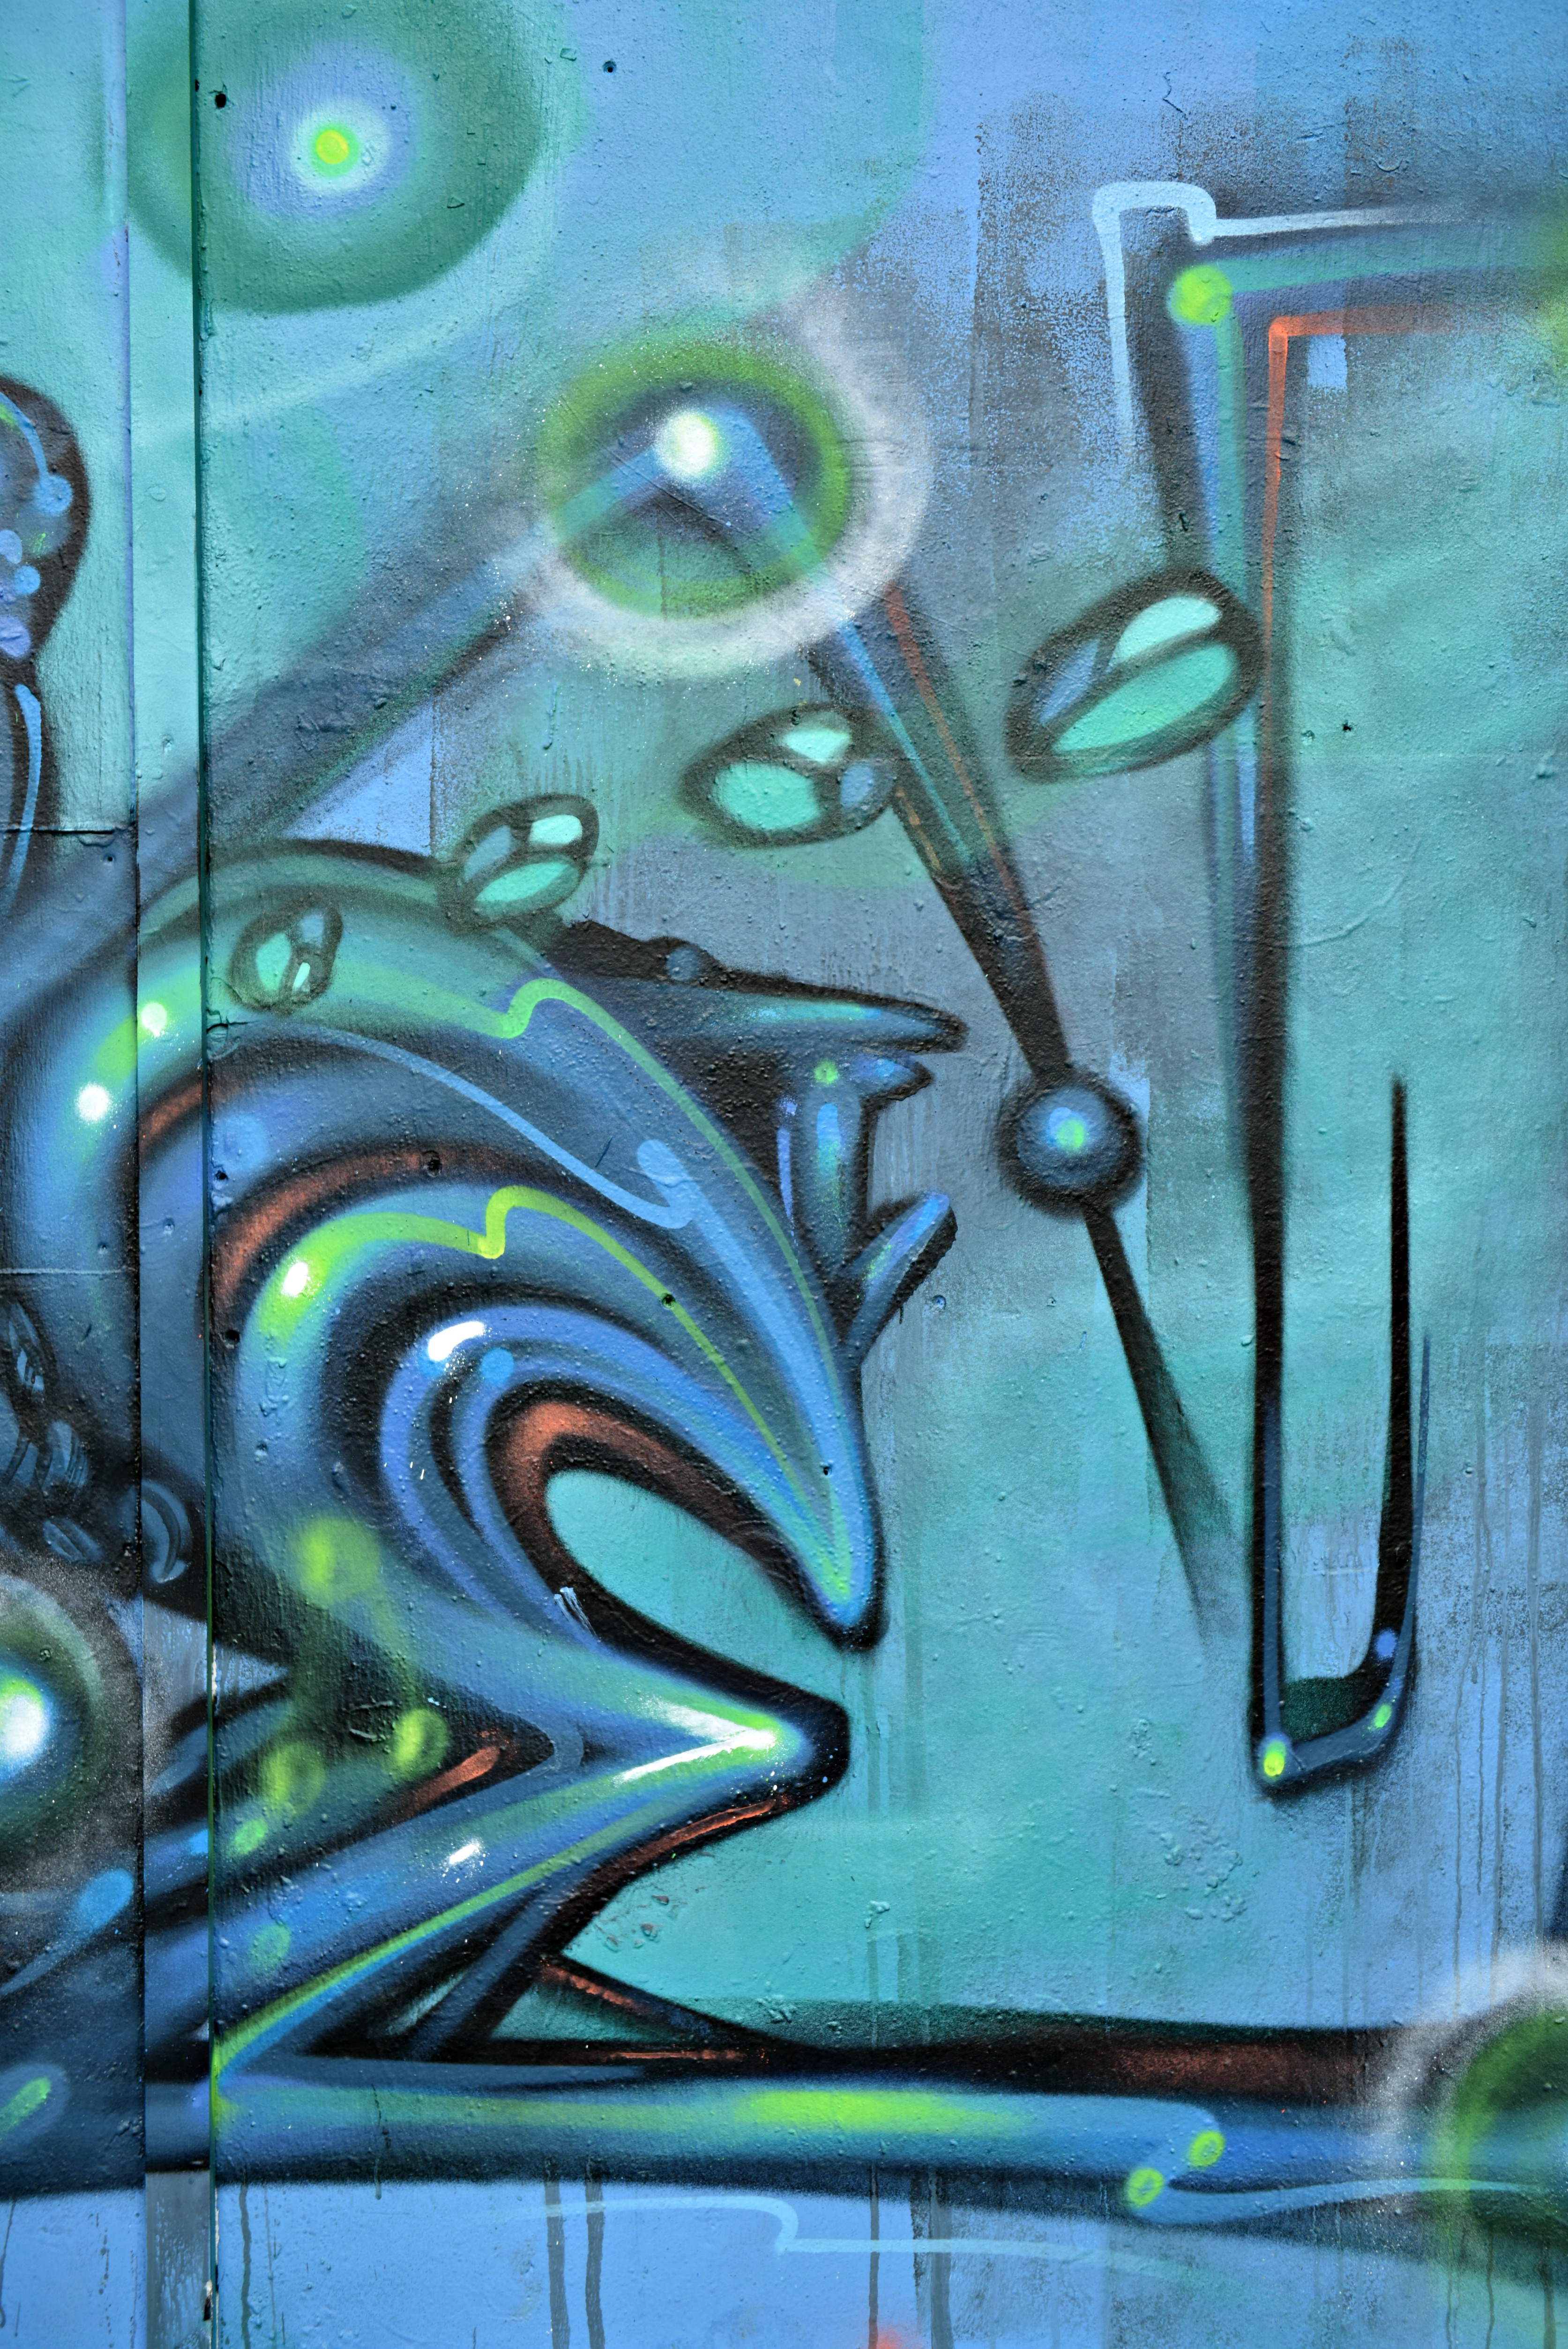 <img src="ana.jpg" alt="ana blue alien street art wall"> 